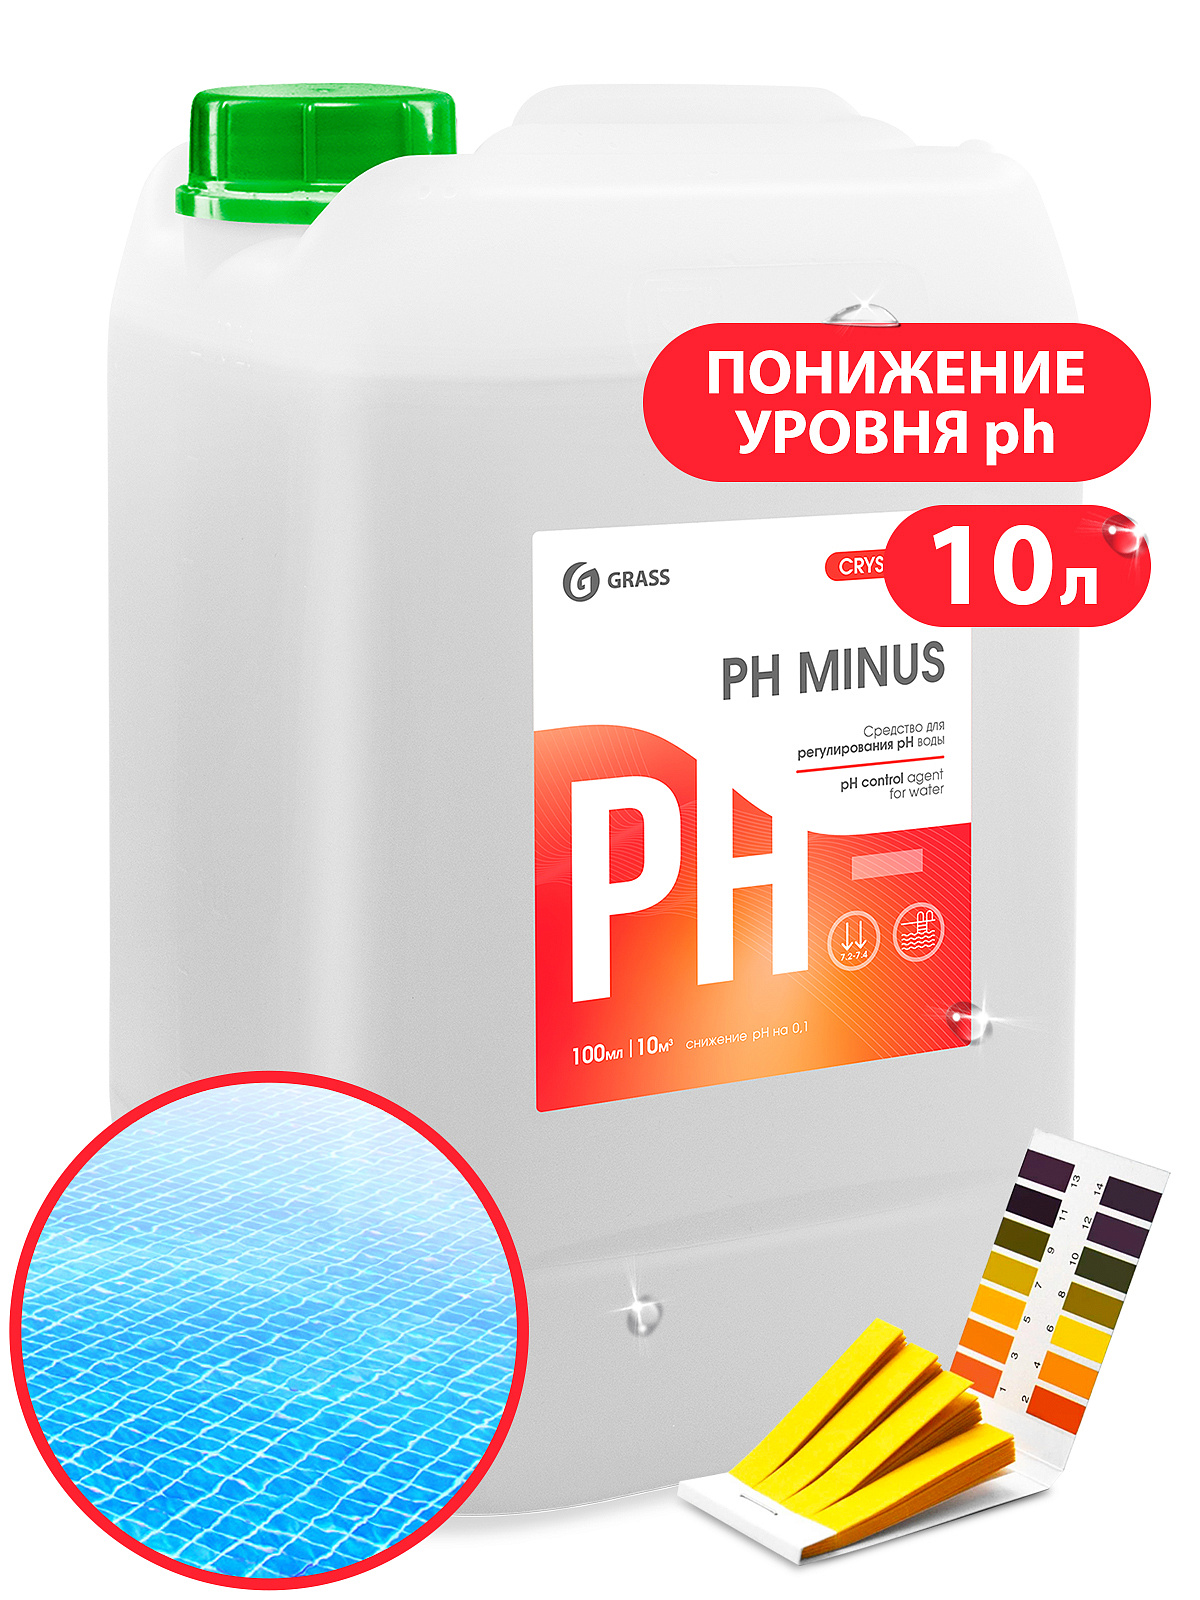 Средство для регулирования pH воды CRYSPOOL pH minus (канистра 12кг)